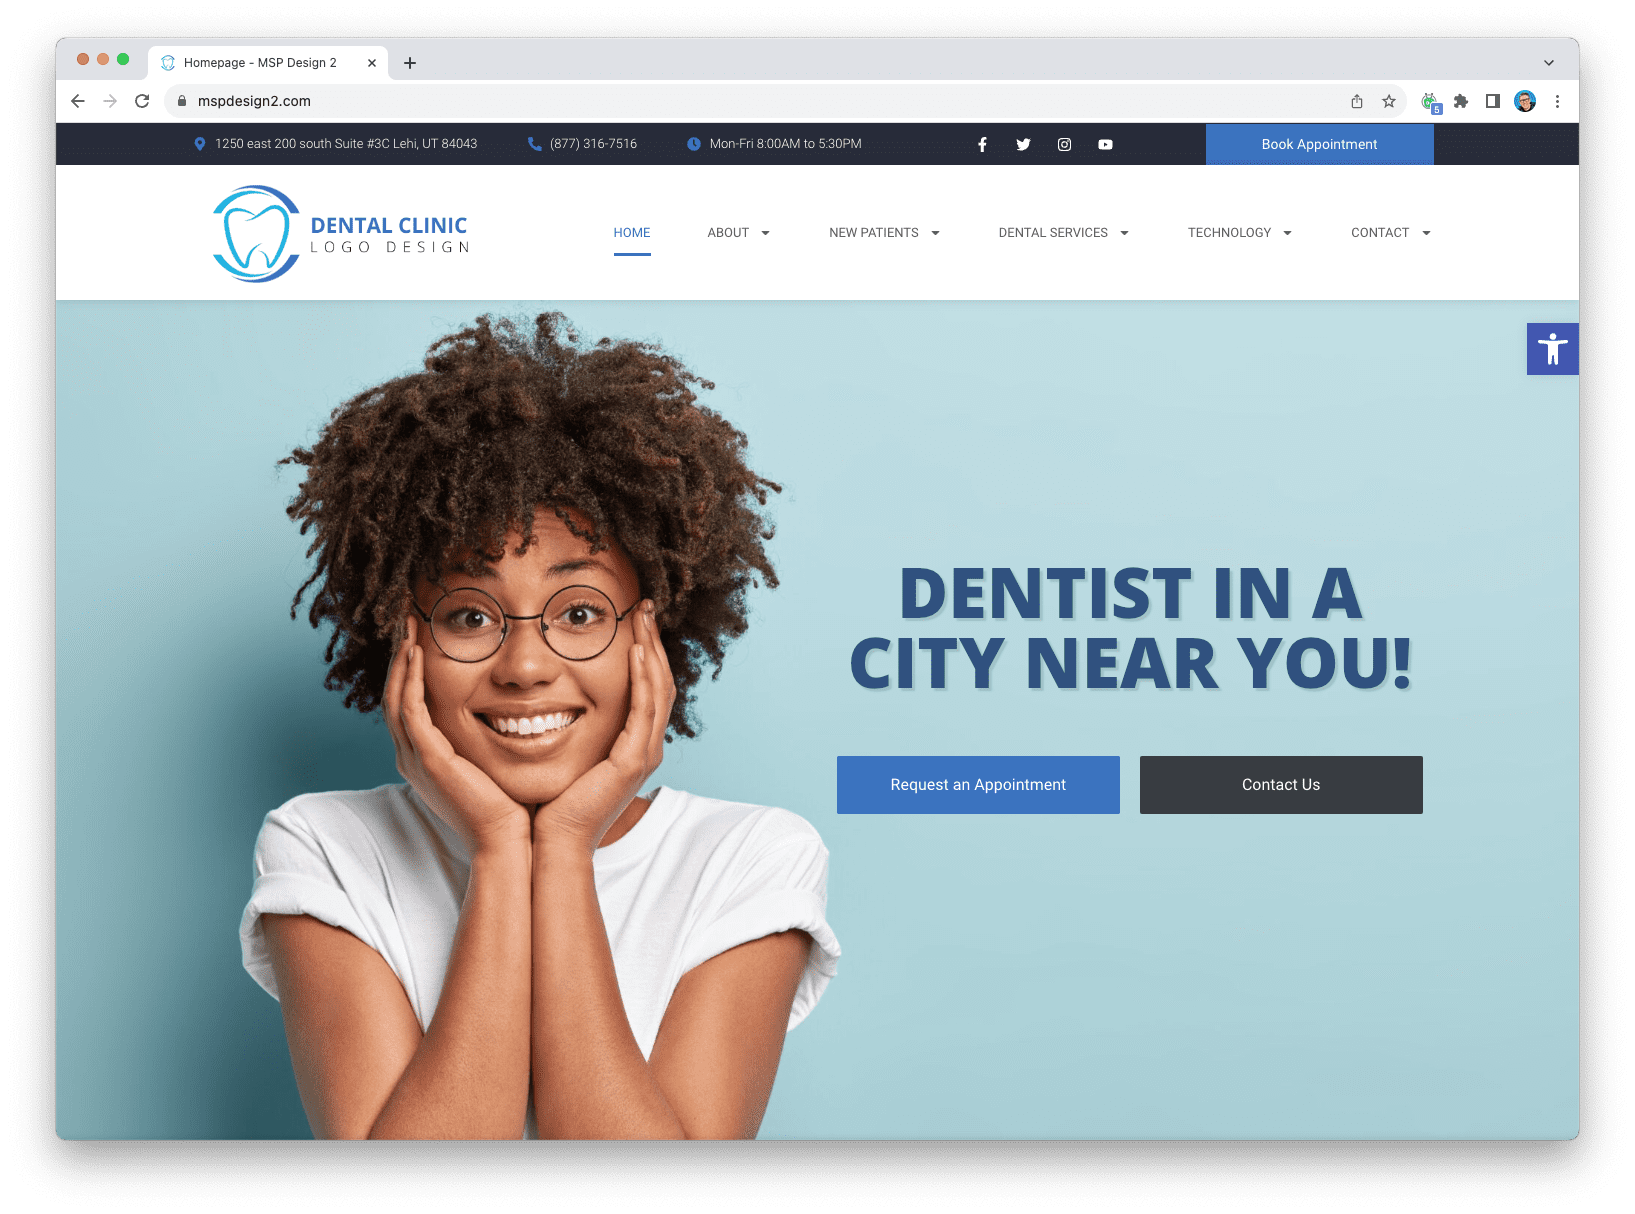 My Social Practice - Social Media Marketing for Dental & Dental Specialty Practices - dental website design